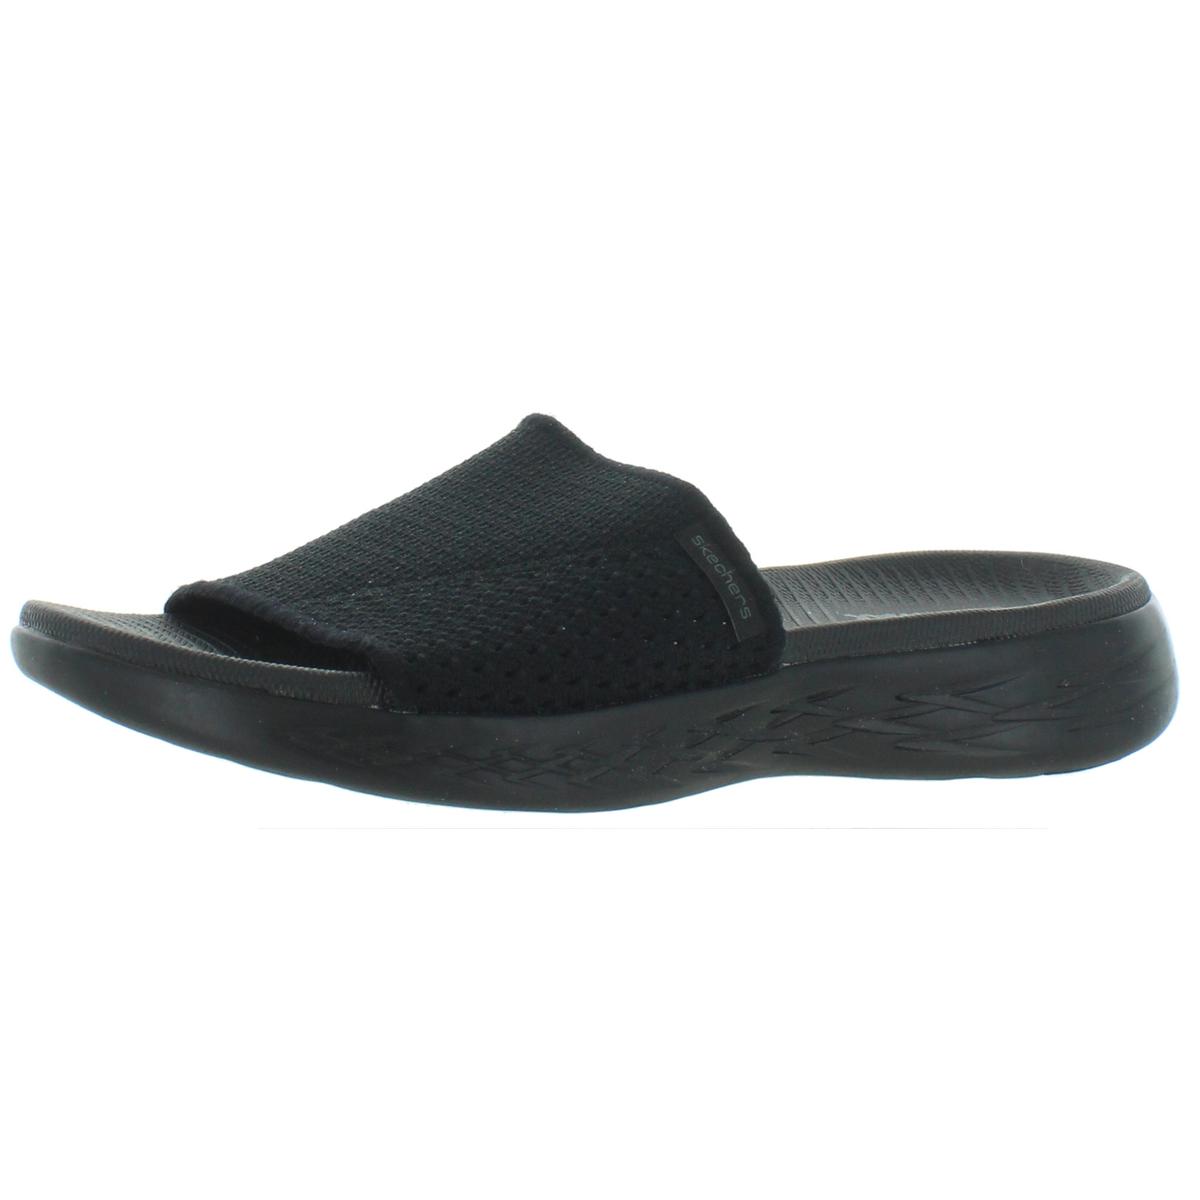 Skechers Womens Black Knit Slip On Slide Sandals Shoes 7 Medium (B,M) BHFO 0550 | eBay